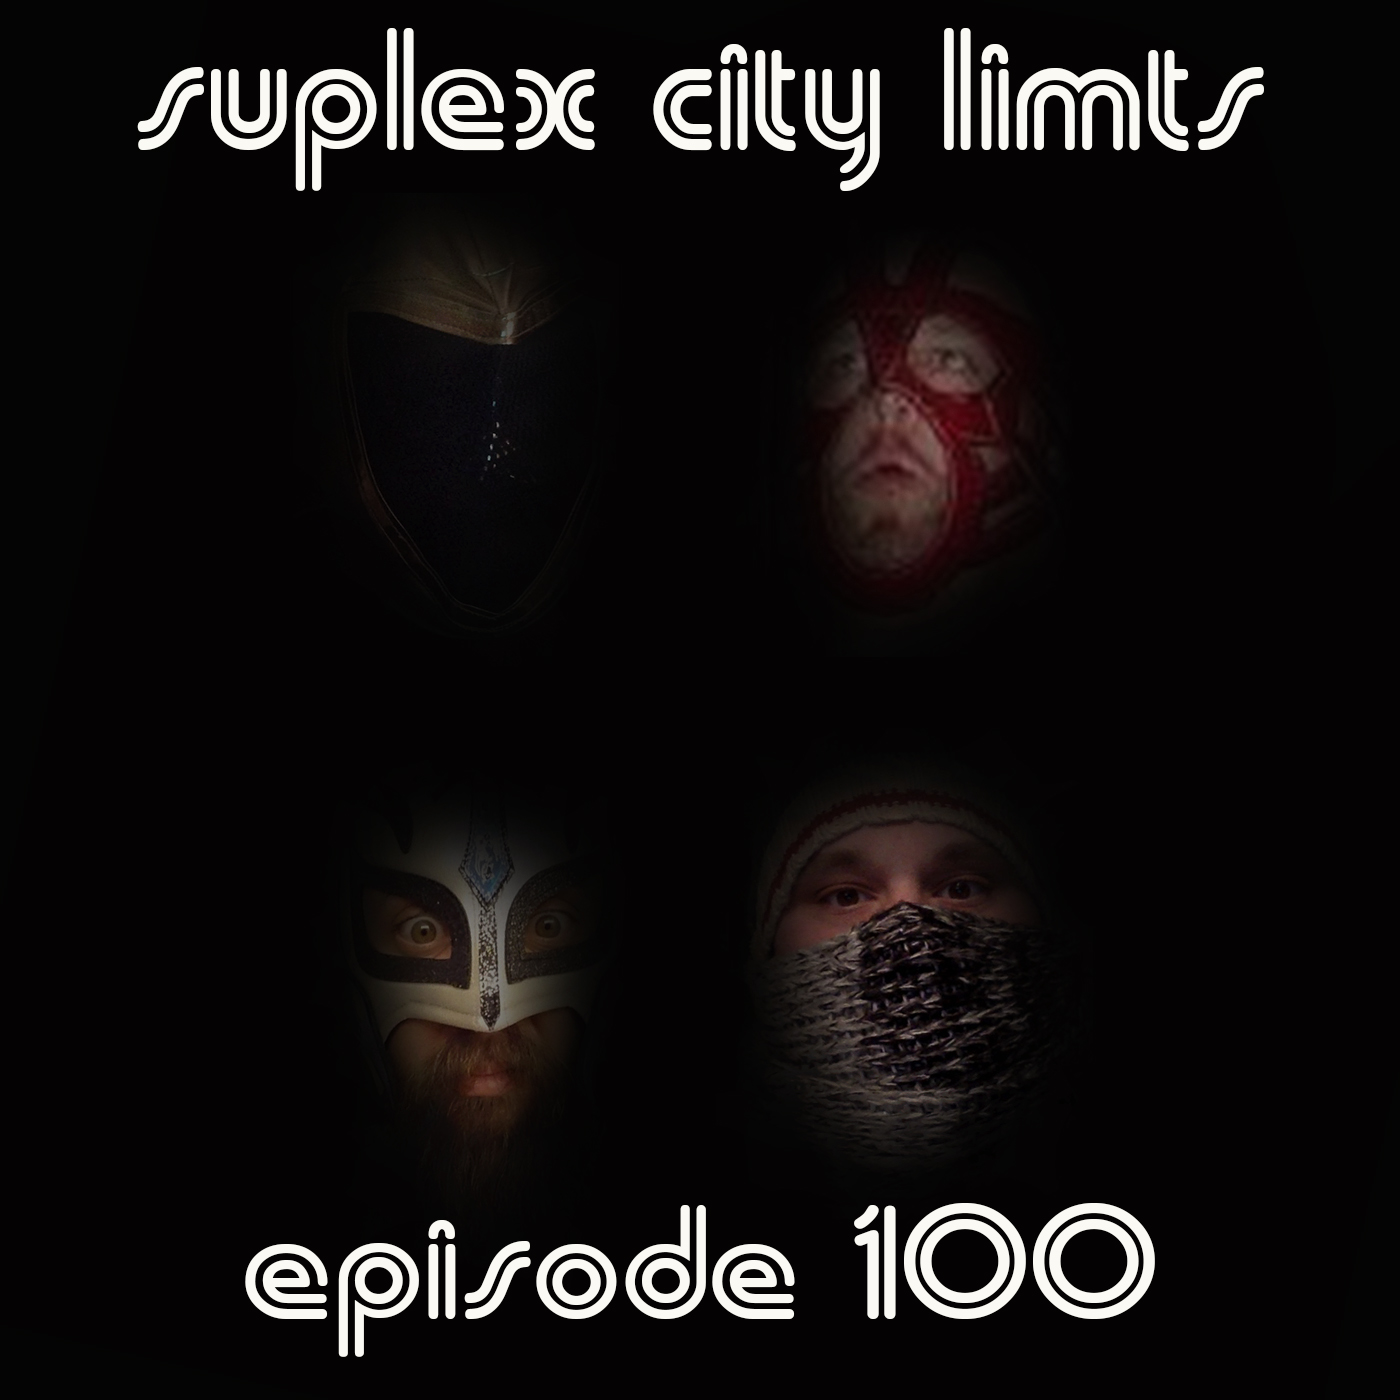 Suplex City Limits Ep. 100